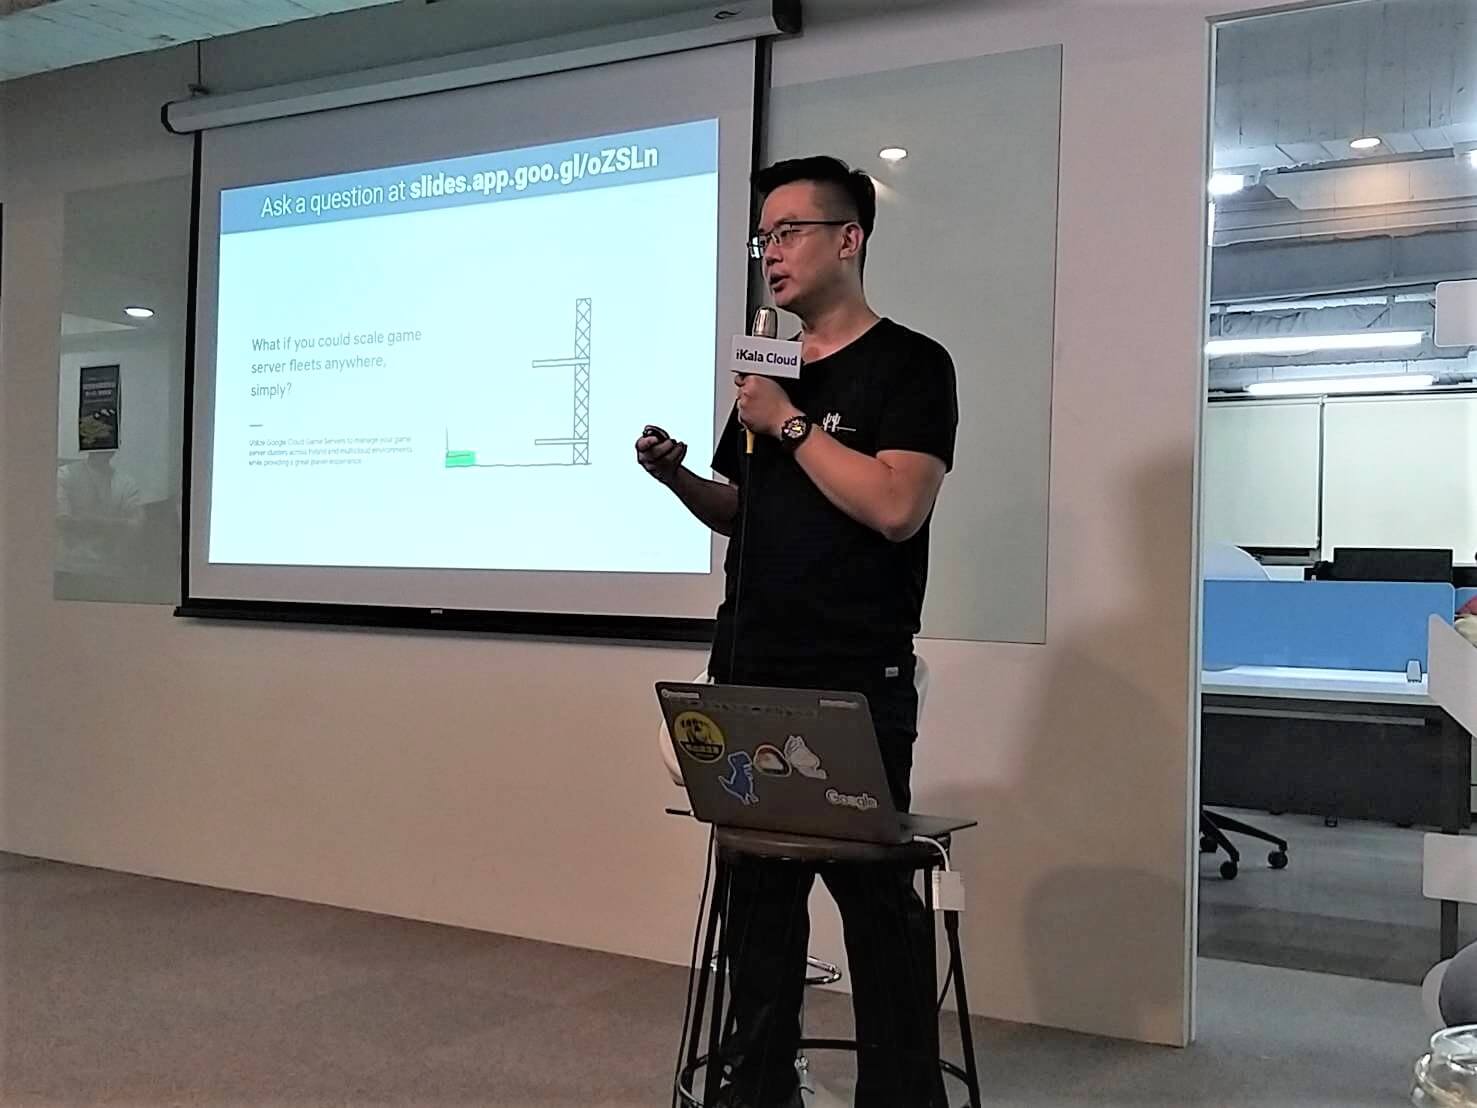 Google Cloud 客戶工程師 Edward Chuang 與現場觀眾分享 Google Cloud 解決方案。